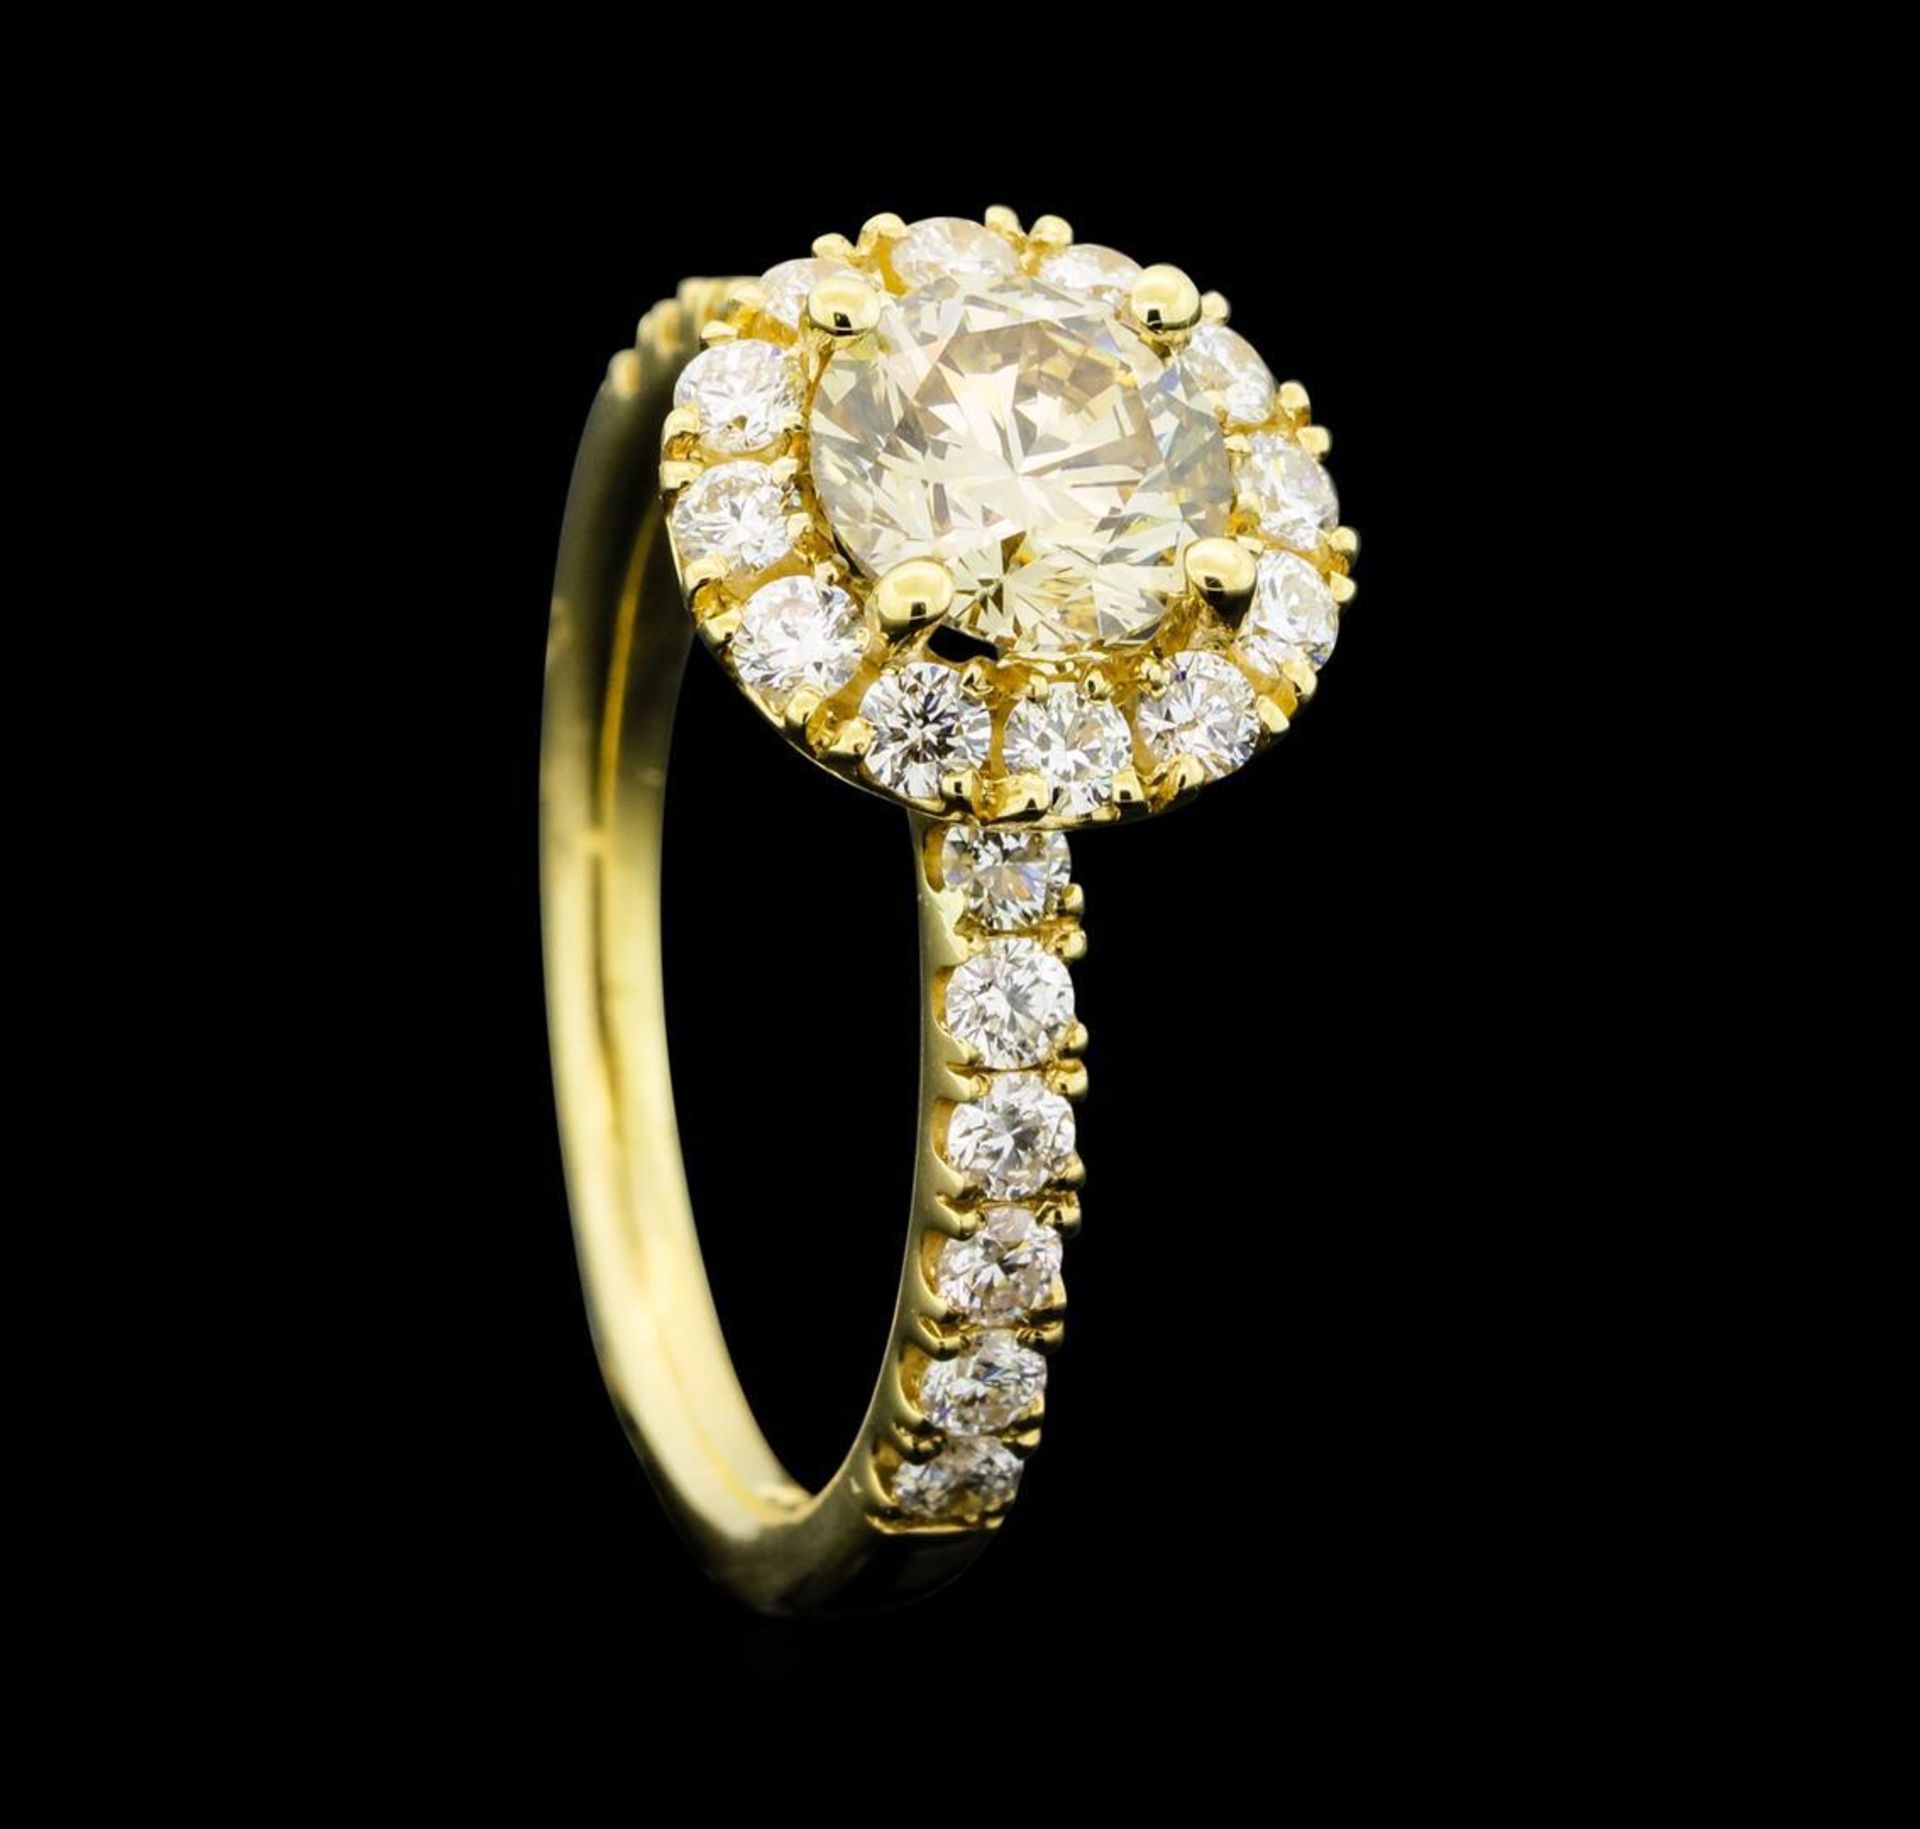 1.66 ctw Diamond Ring - 14KT Yellow Gold - Image 4 of 5